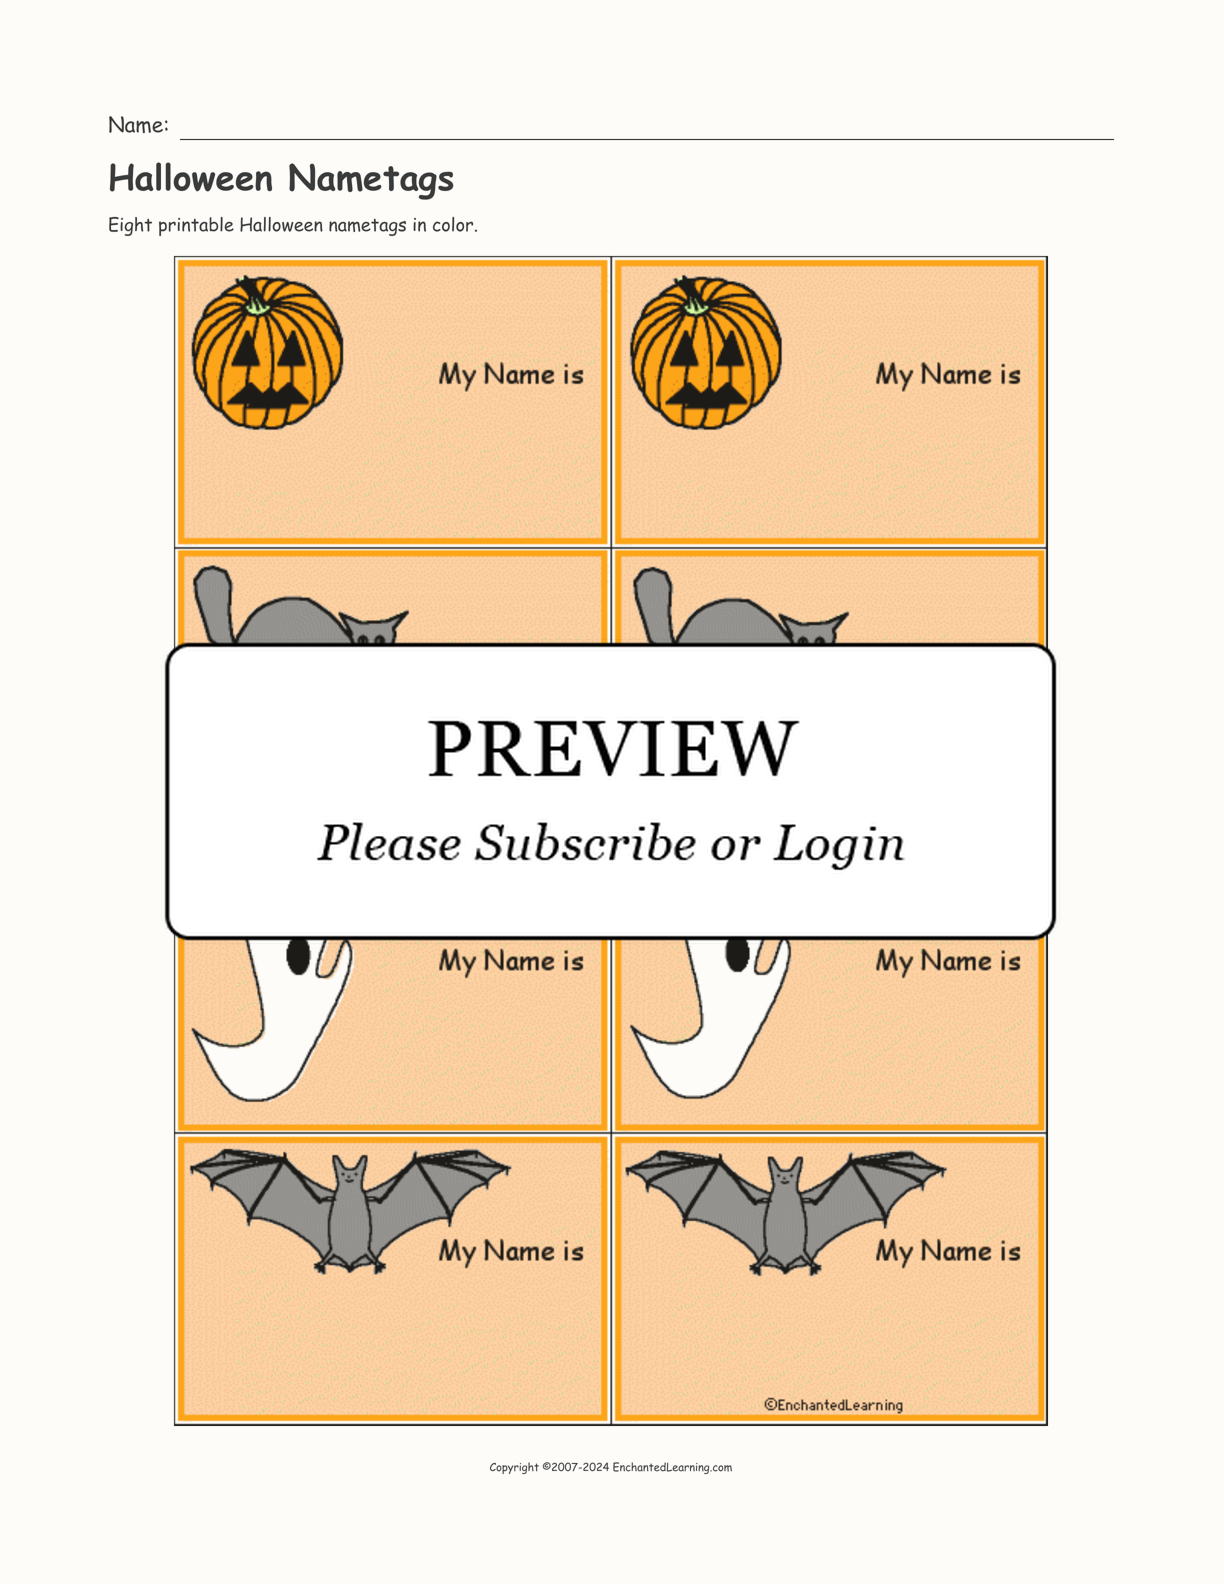 Halloween Nametags interactive printout page 1